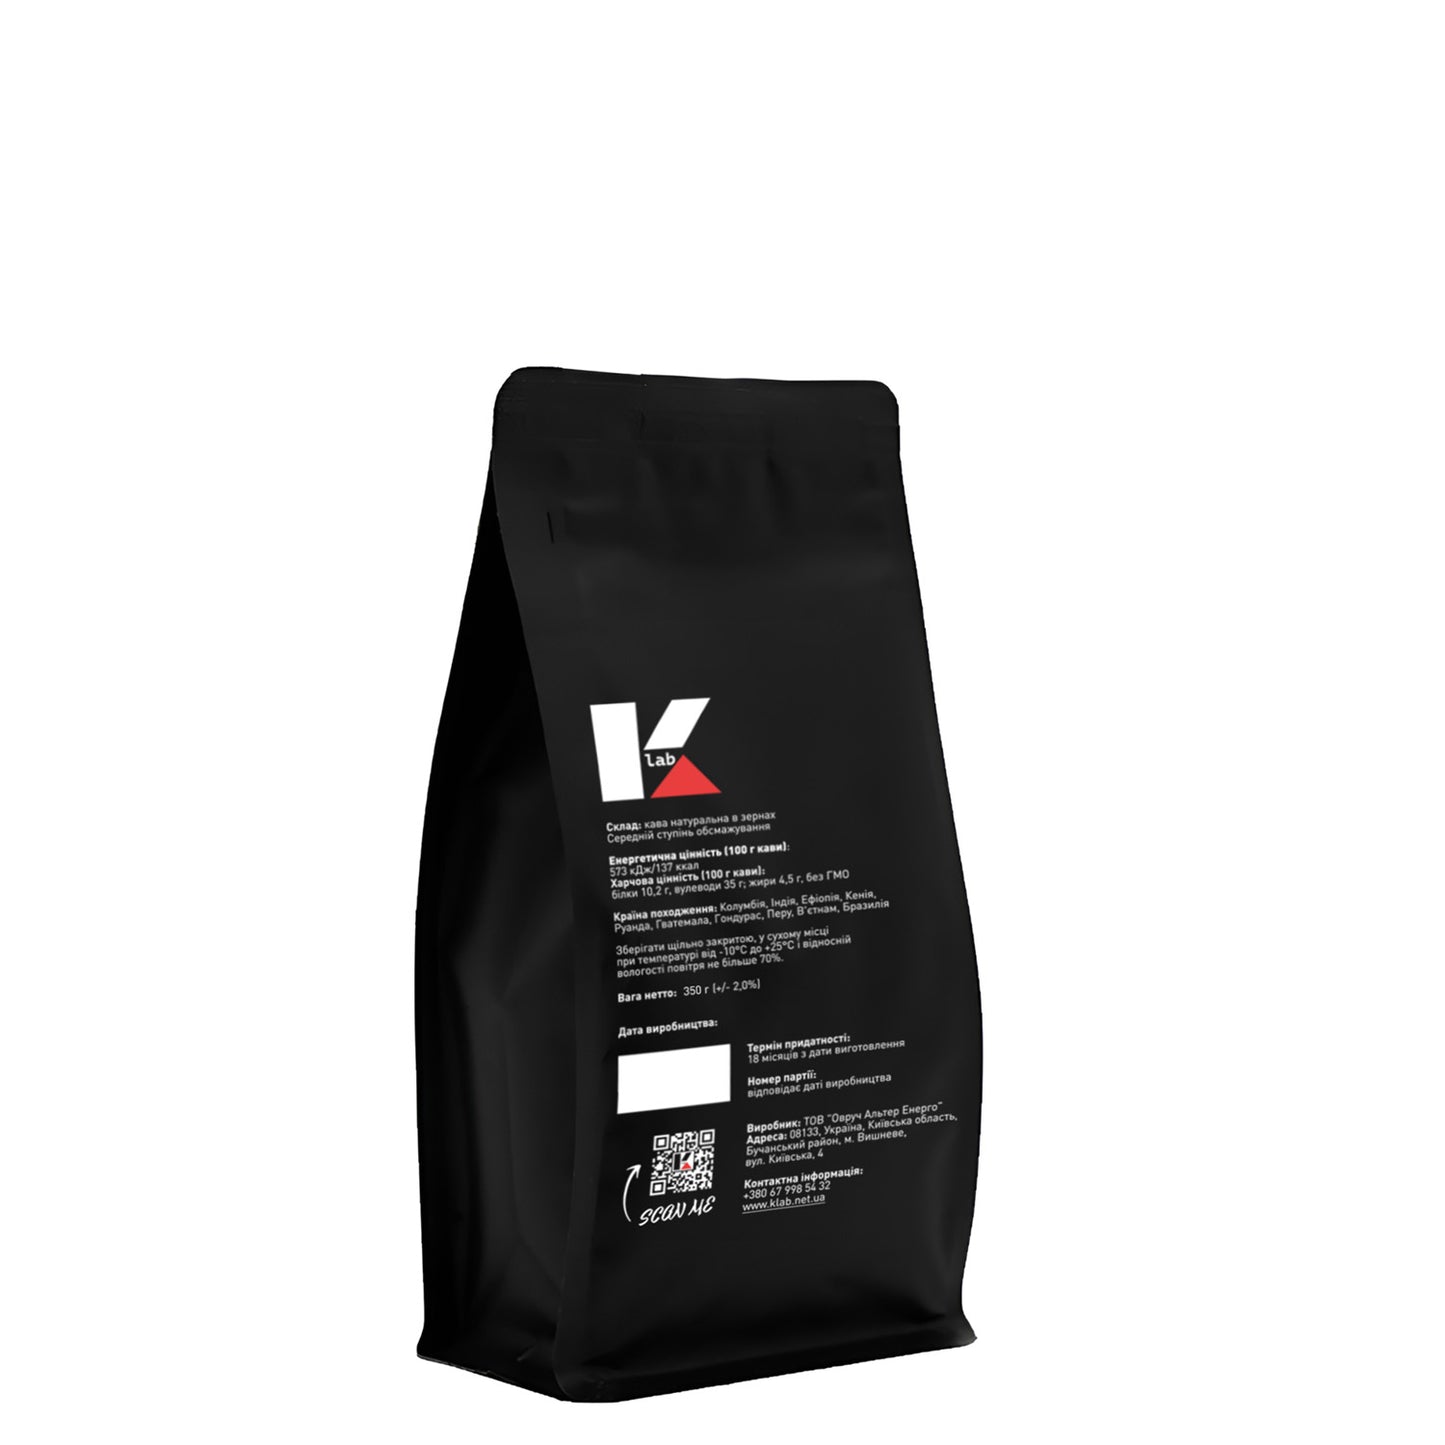 COFFEE STORY №5 - Klab (0.35kg back)